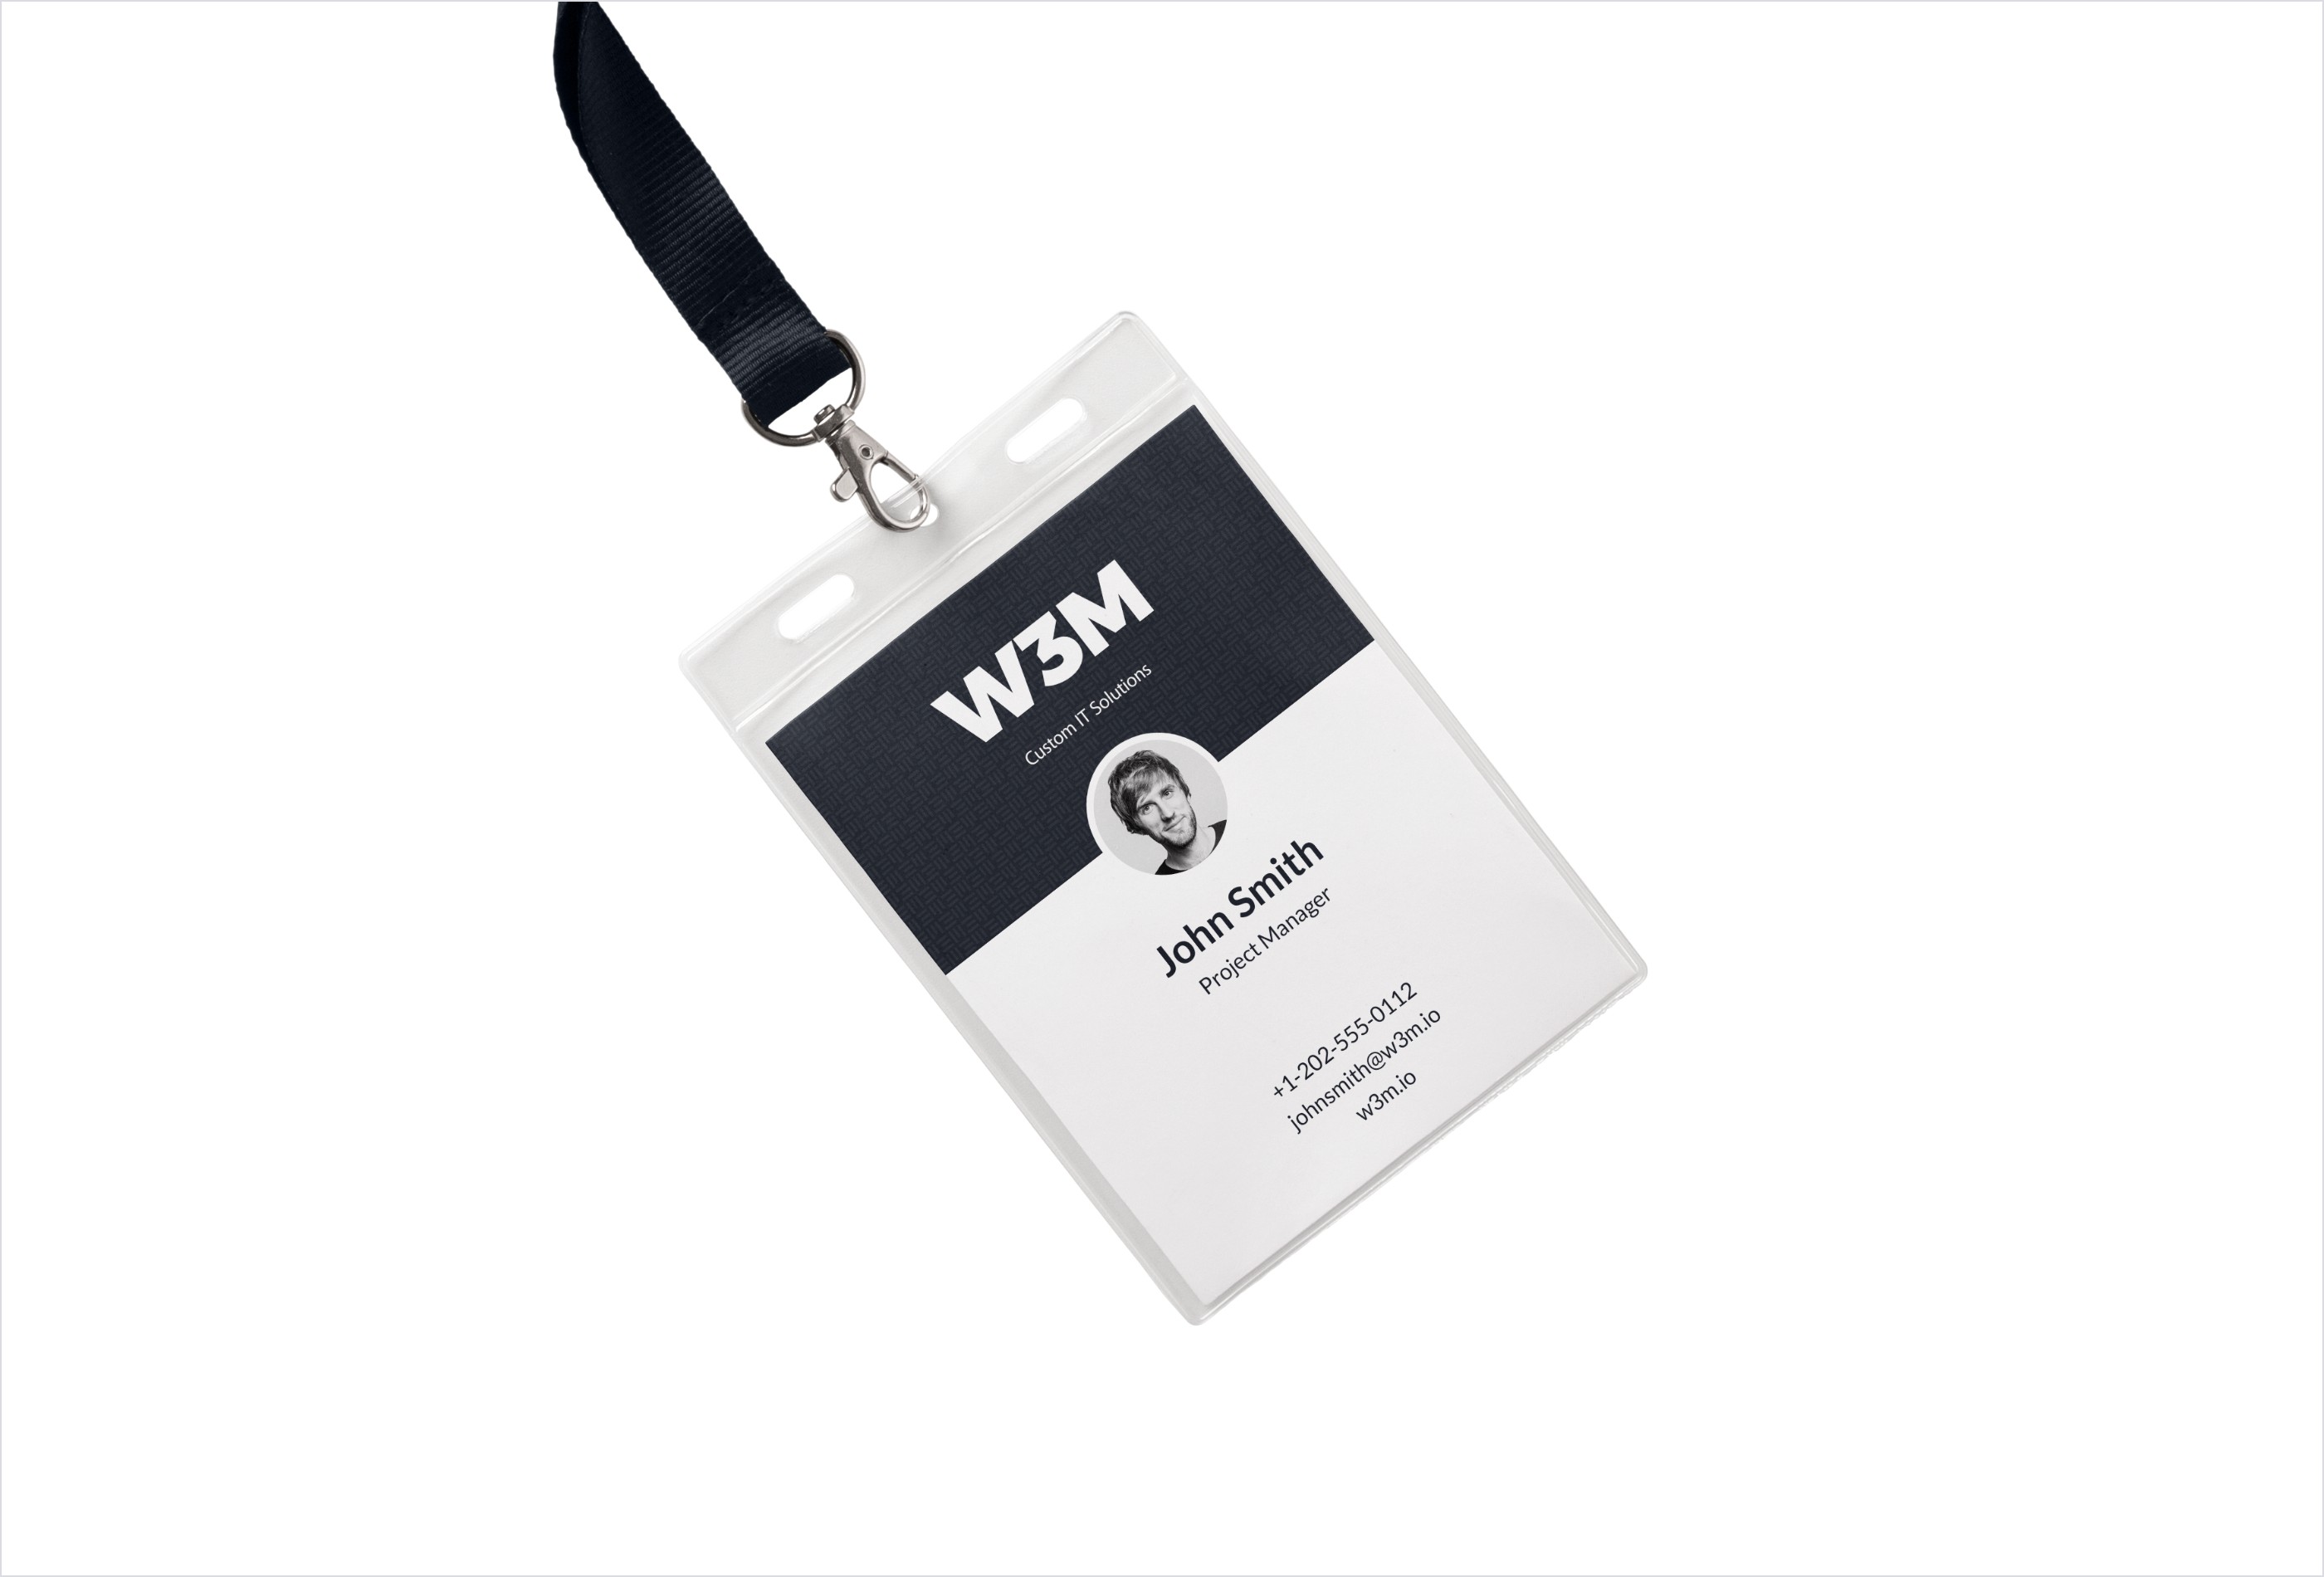 W3M Rebranding – Branding